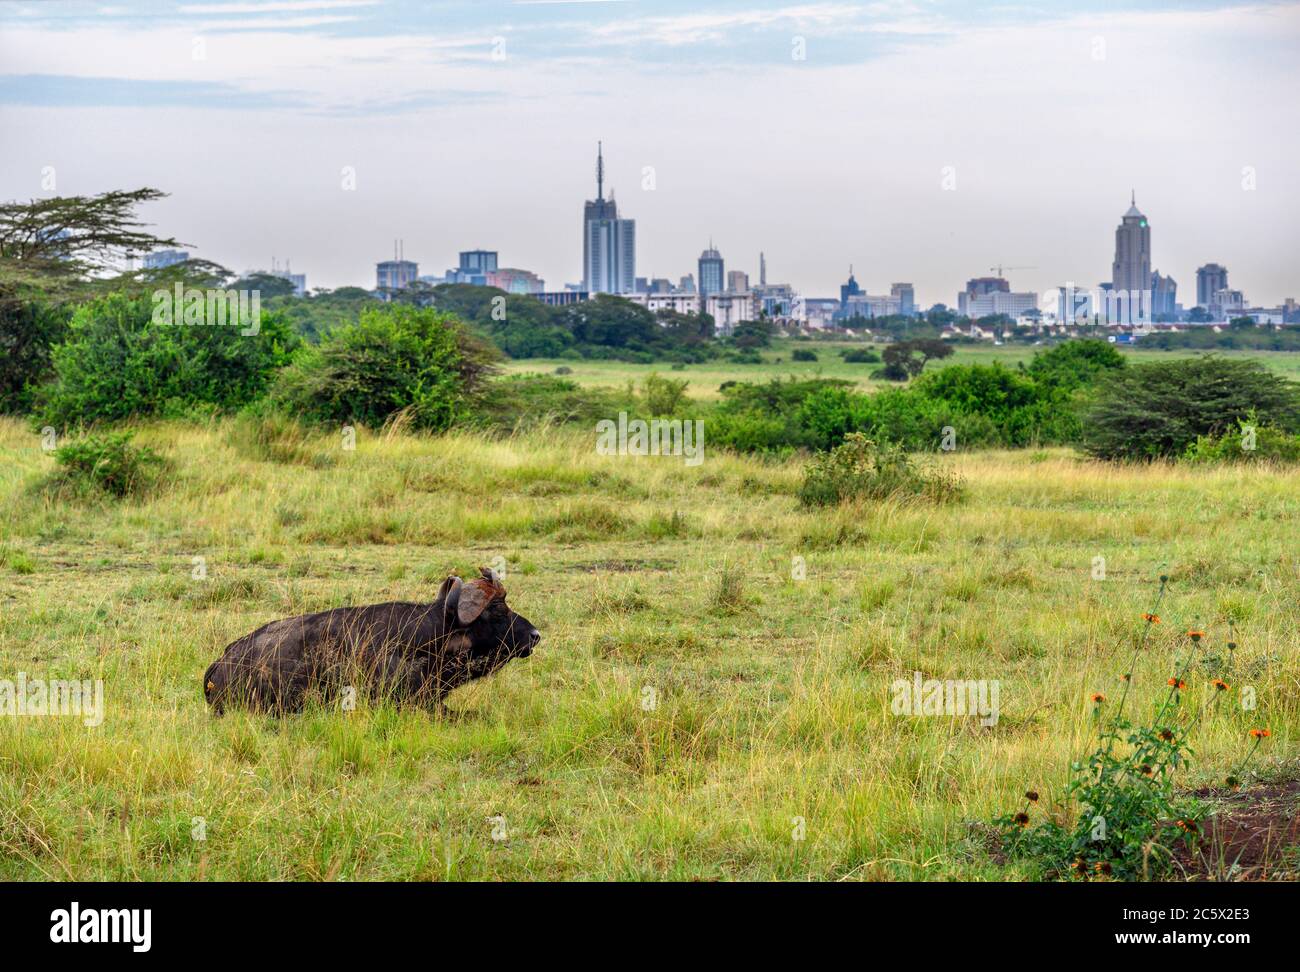 African Buffalo or Cape Buffalo (Syncerus caffer) with the city skyline behind, Nairobi National Park, Kenya, East Africa Stock Photo